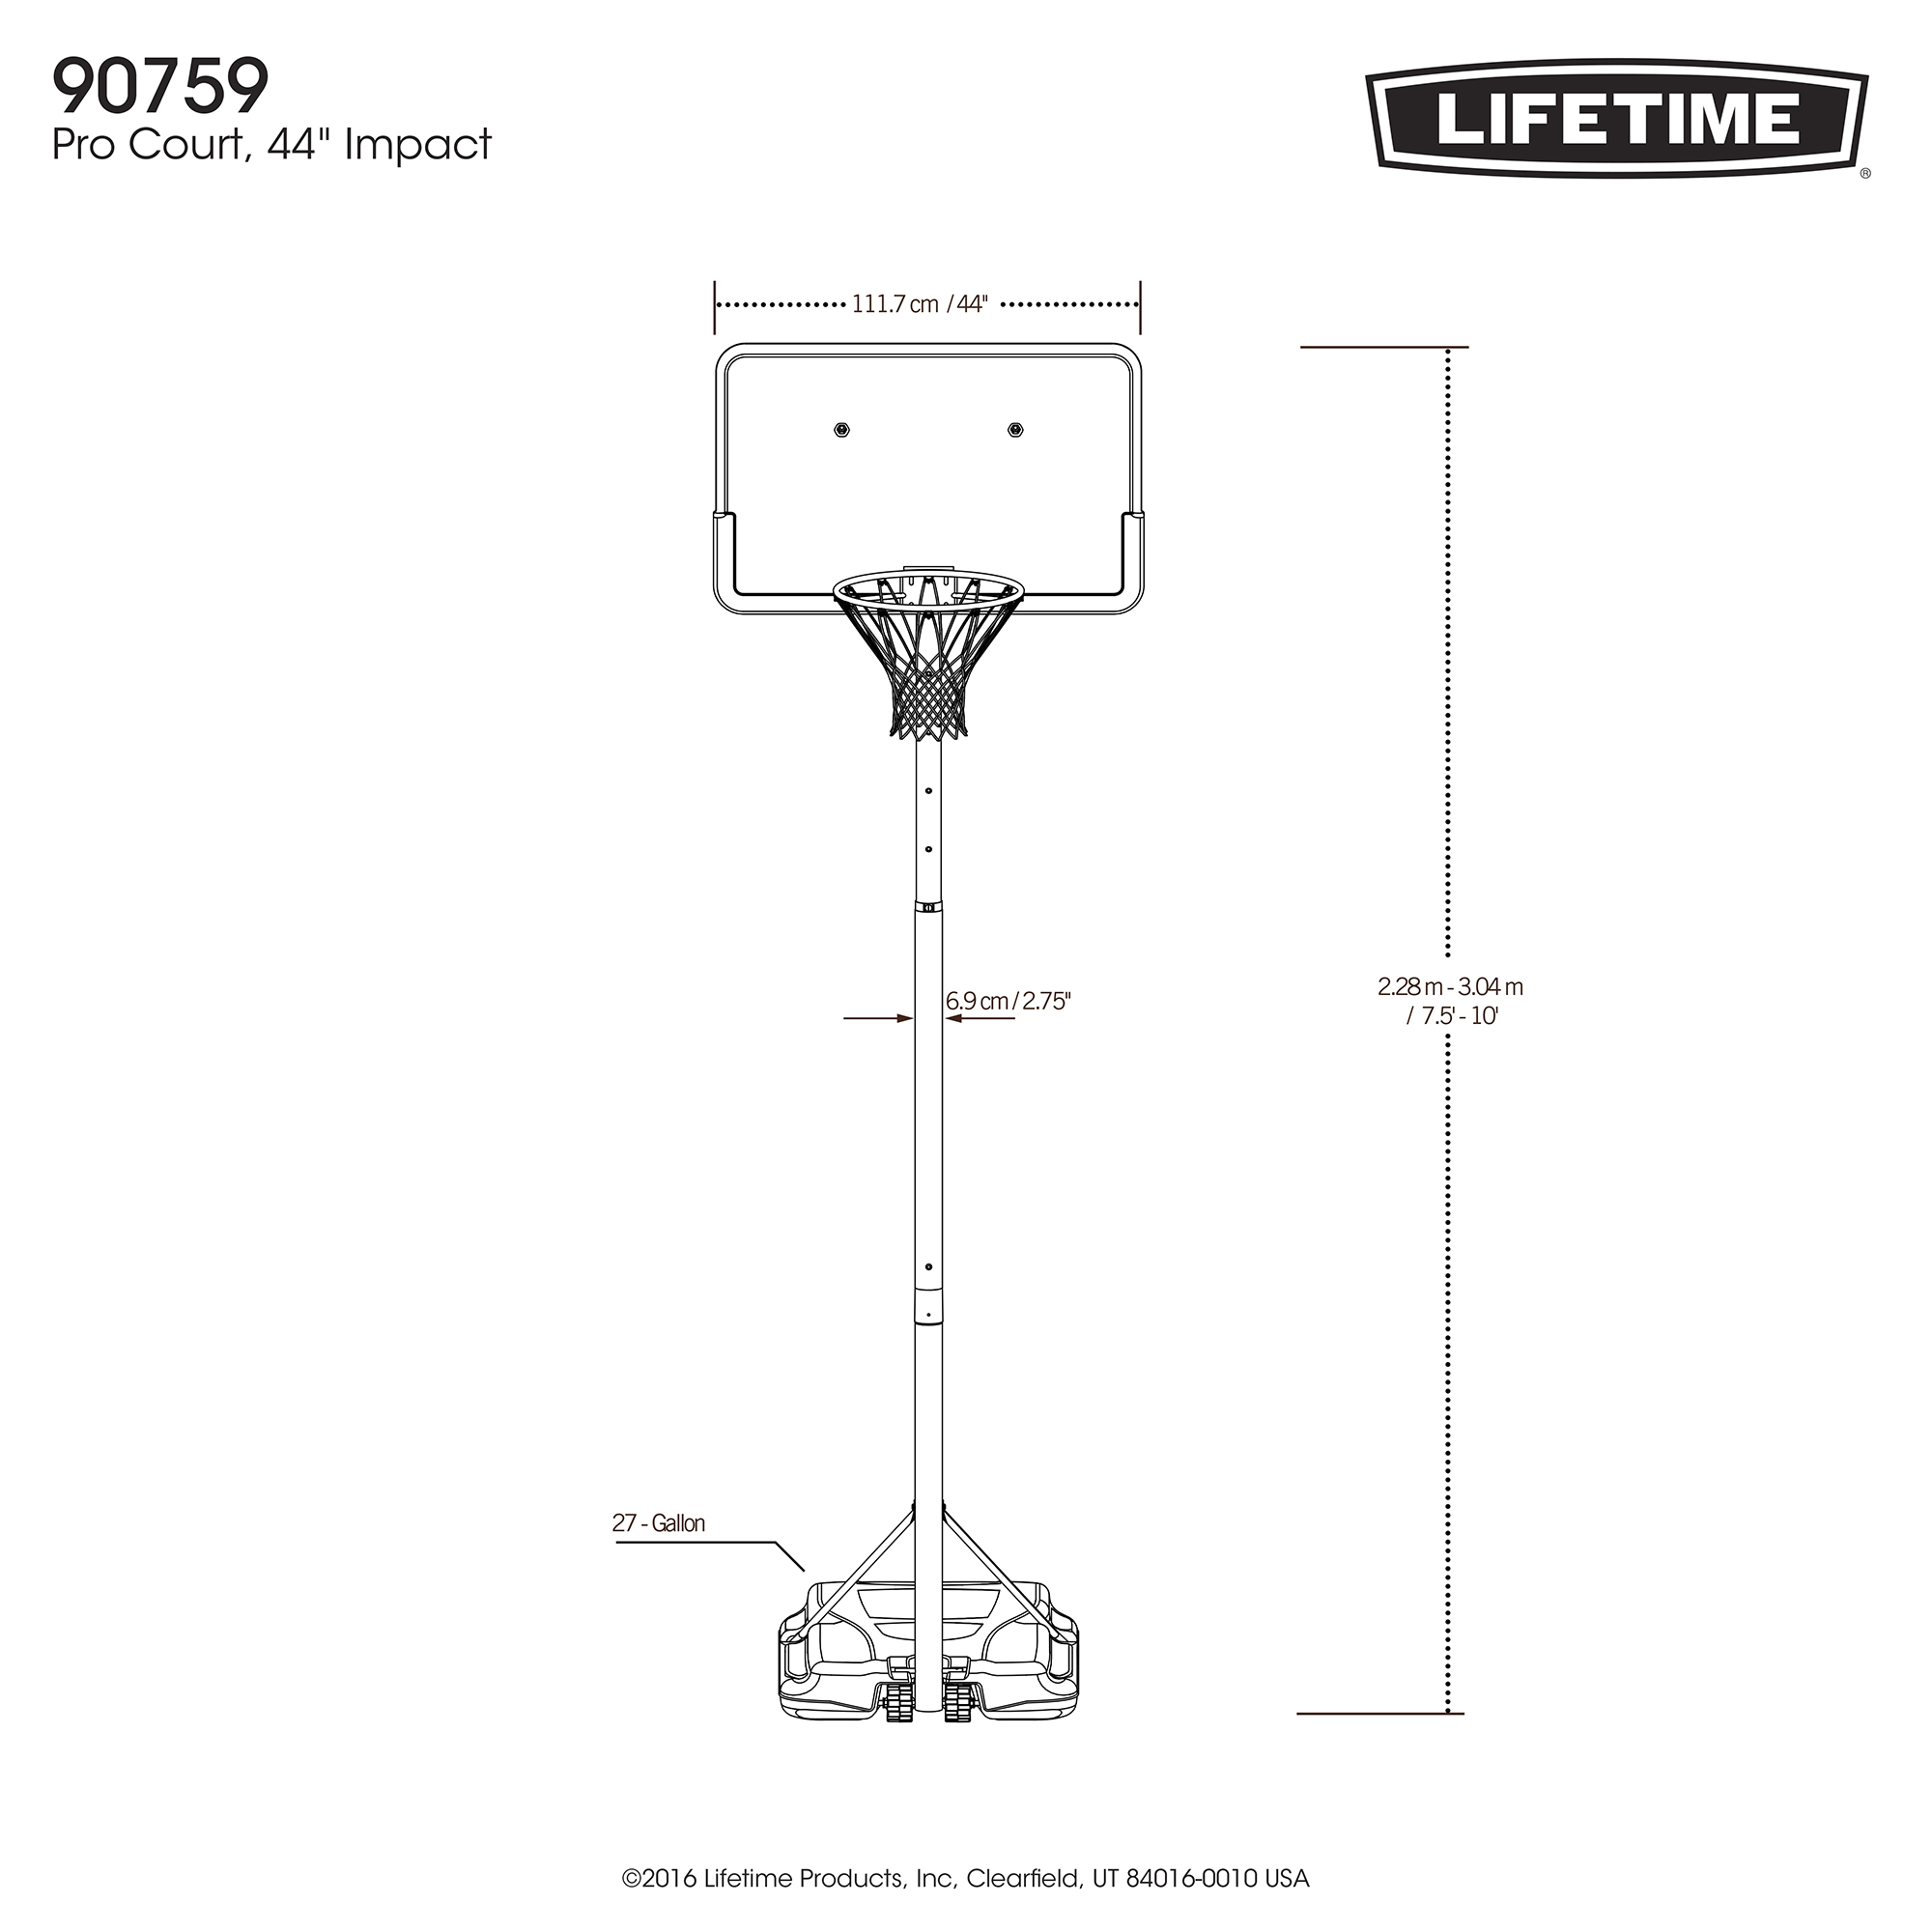 Lifetime Adjustable Portable Basketball Hoop, 44 inch HDPE Plastic Impact® (90759) - image 13 of 17